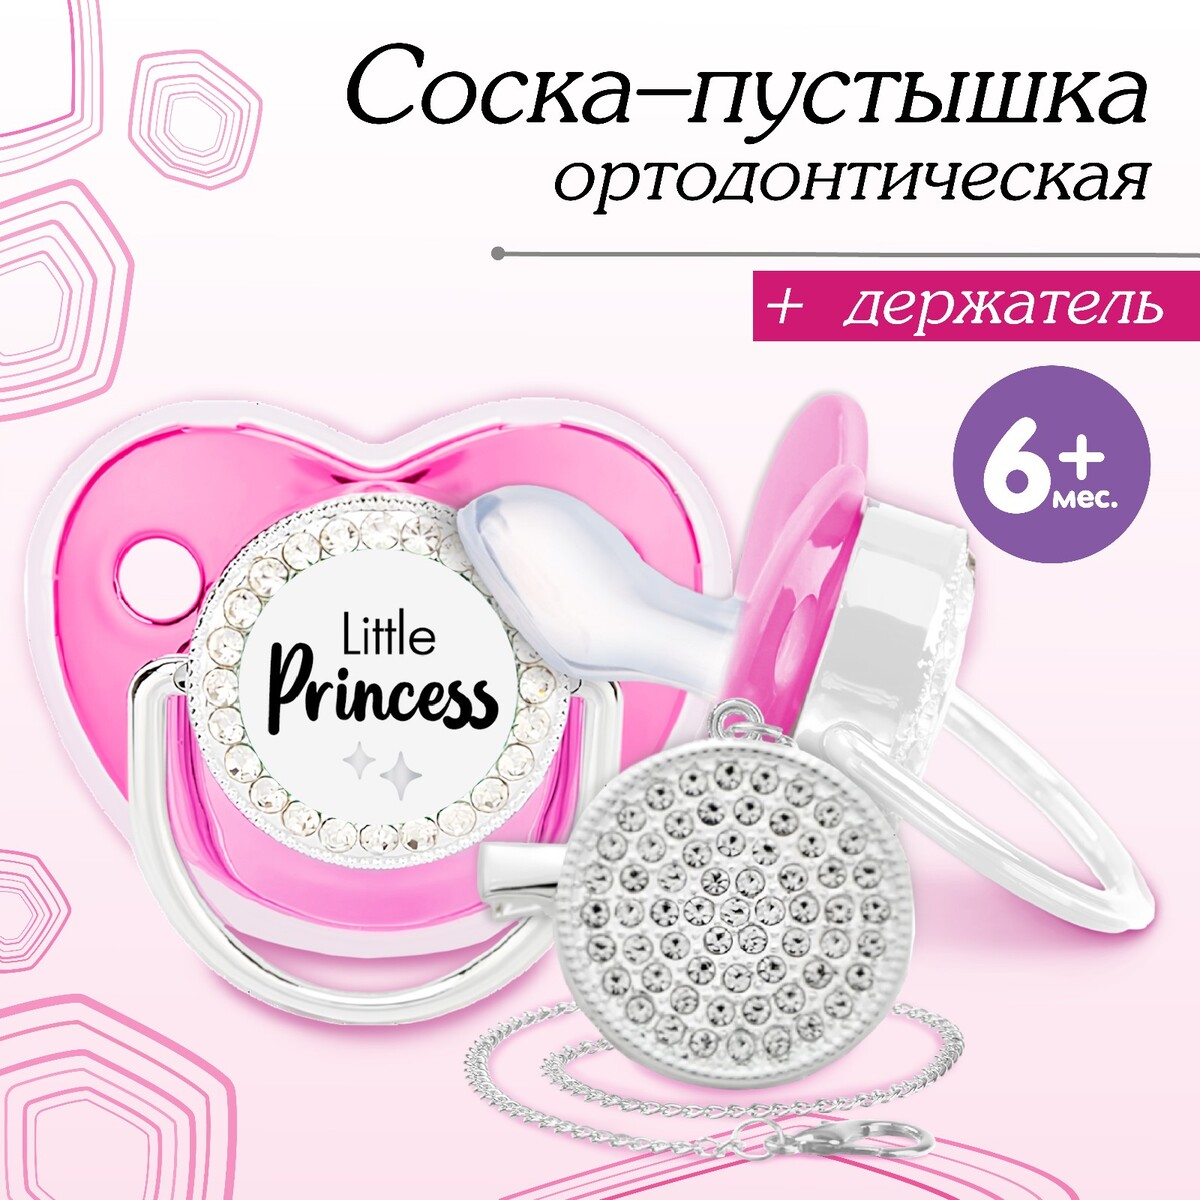 :  -    , little princess,  ,  6 ., /, 